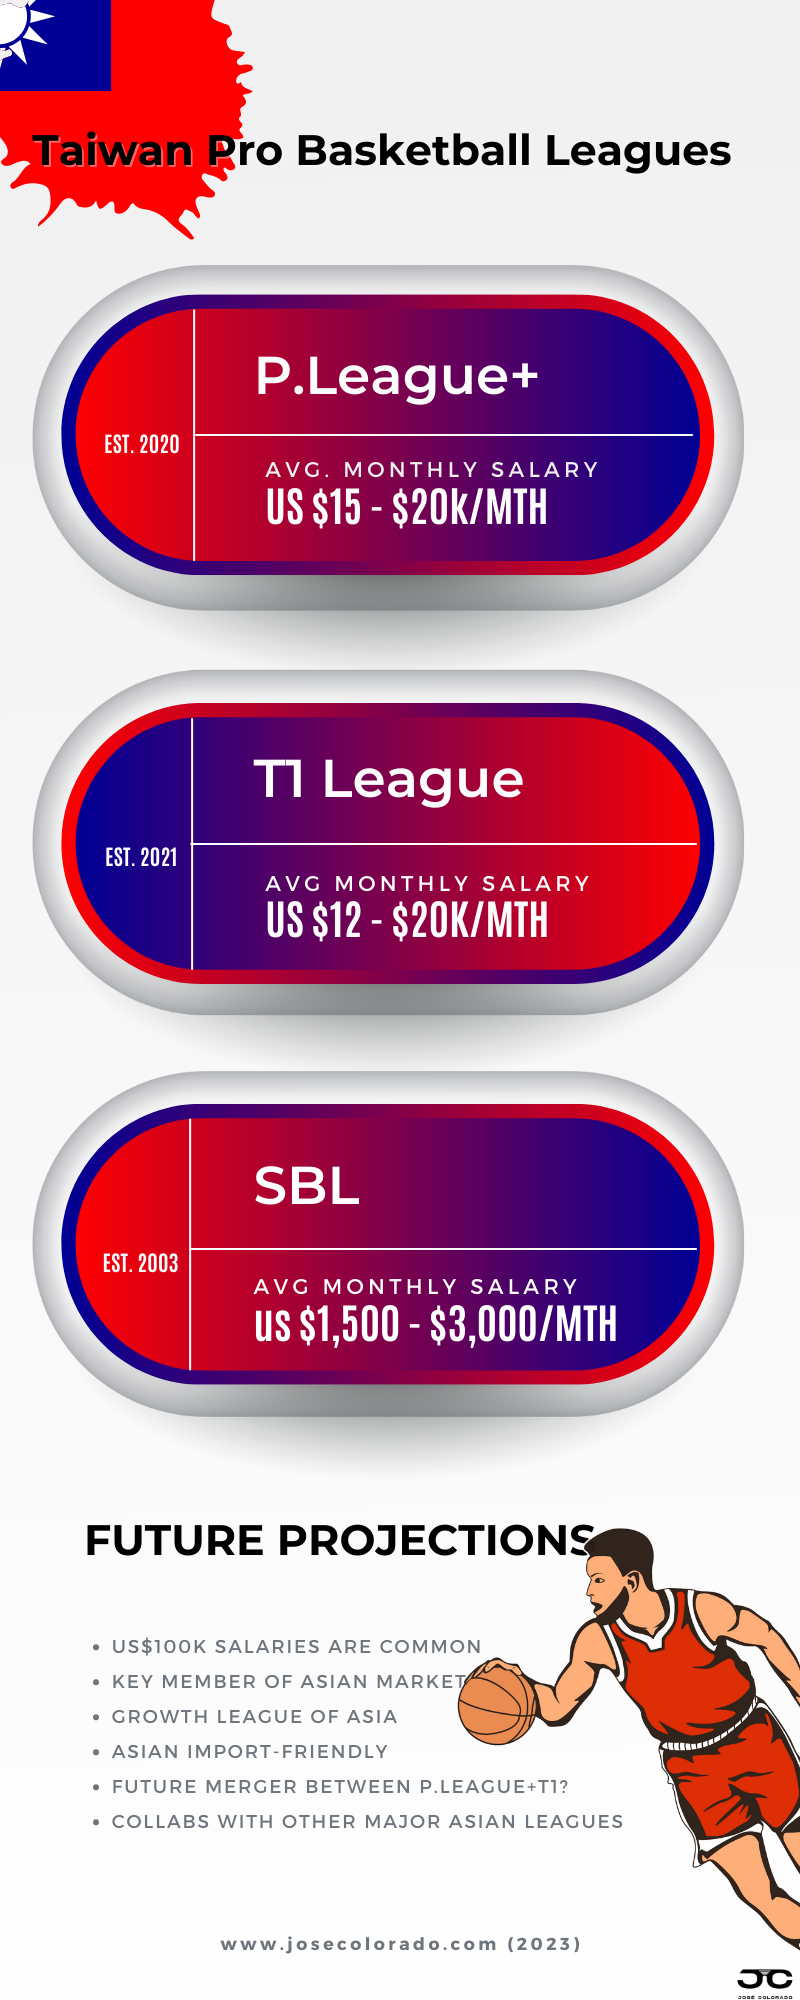 Taiwan basketball league salaries in P.League+, T1 League and Super Basketball League (SBL).